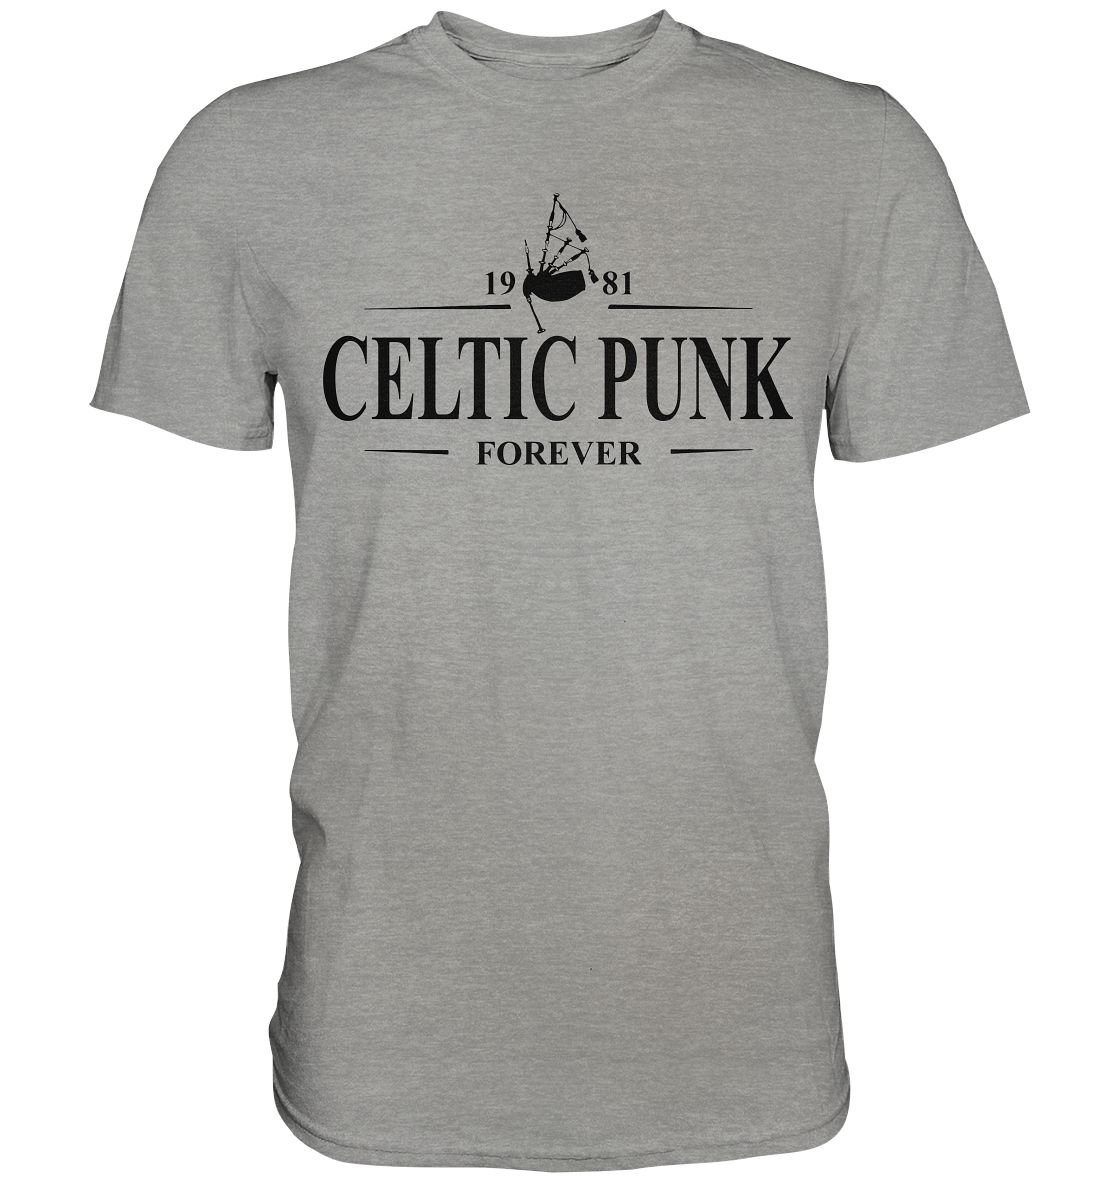 Celtic Punk "Forever" - Premium Shirt